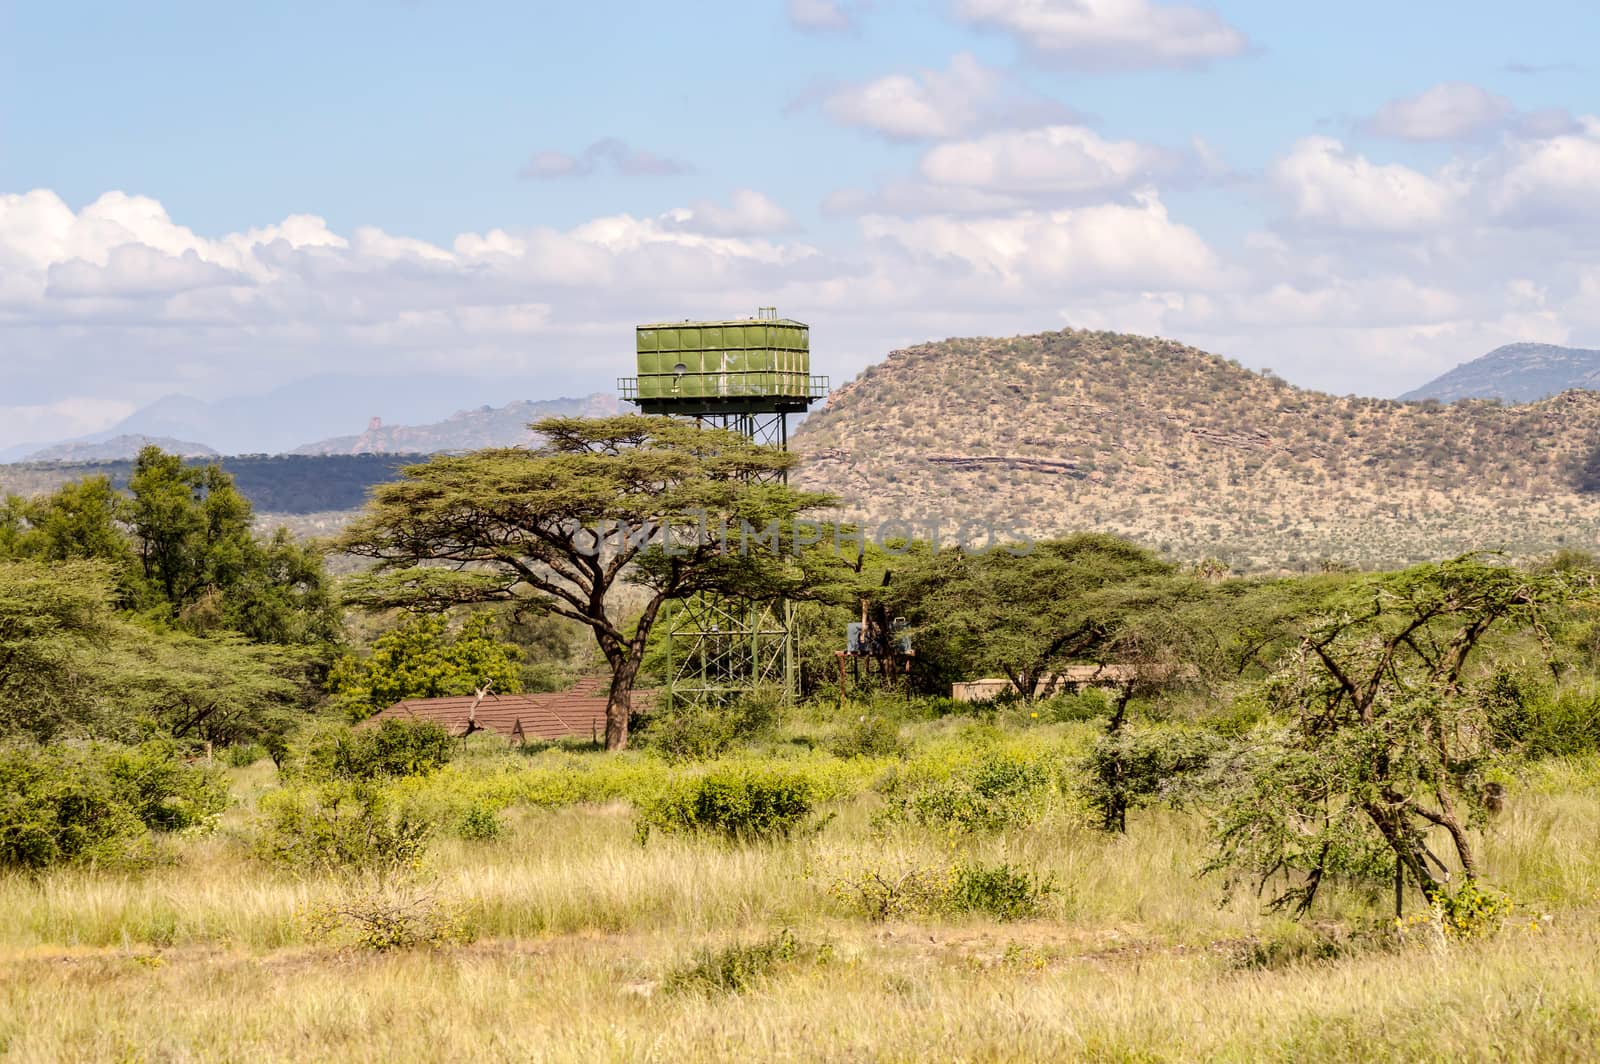 A green water storage tank on stilts in the savannah of Samburu park in Kenya